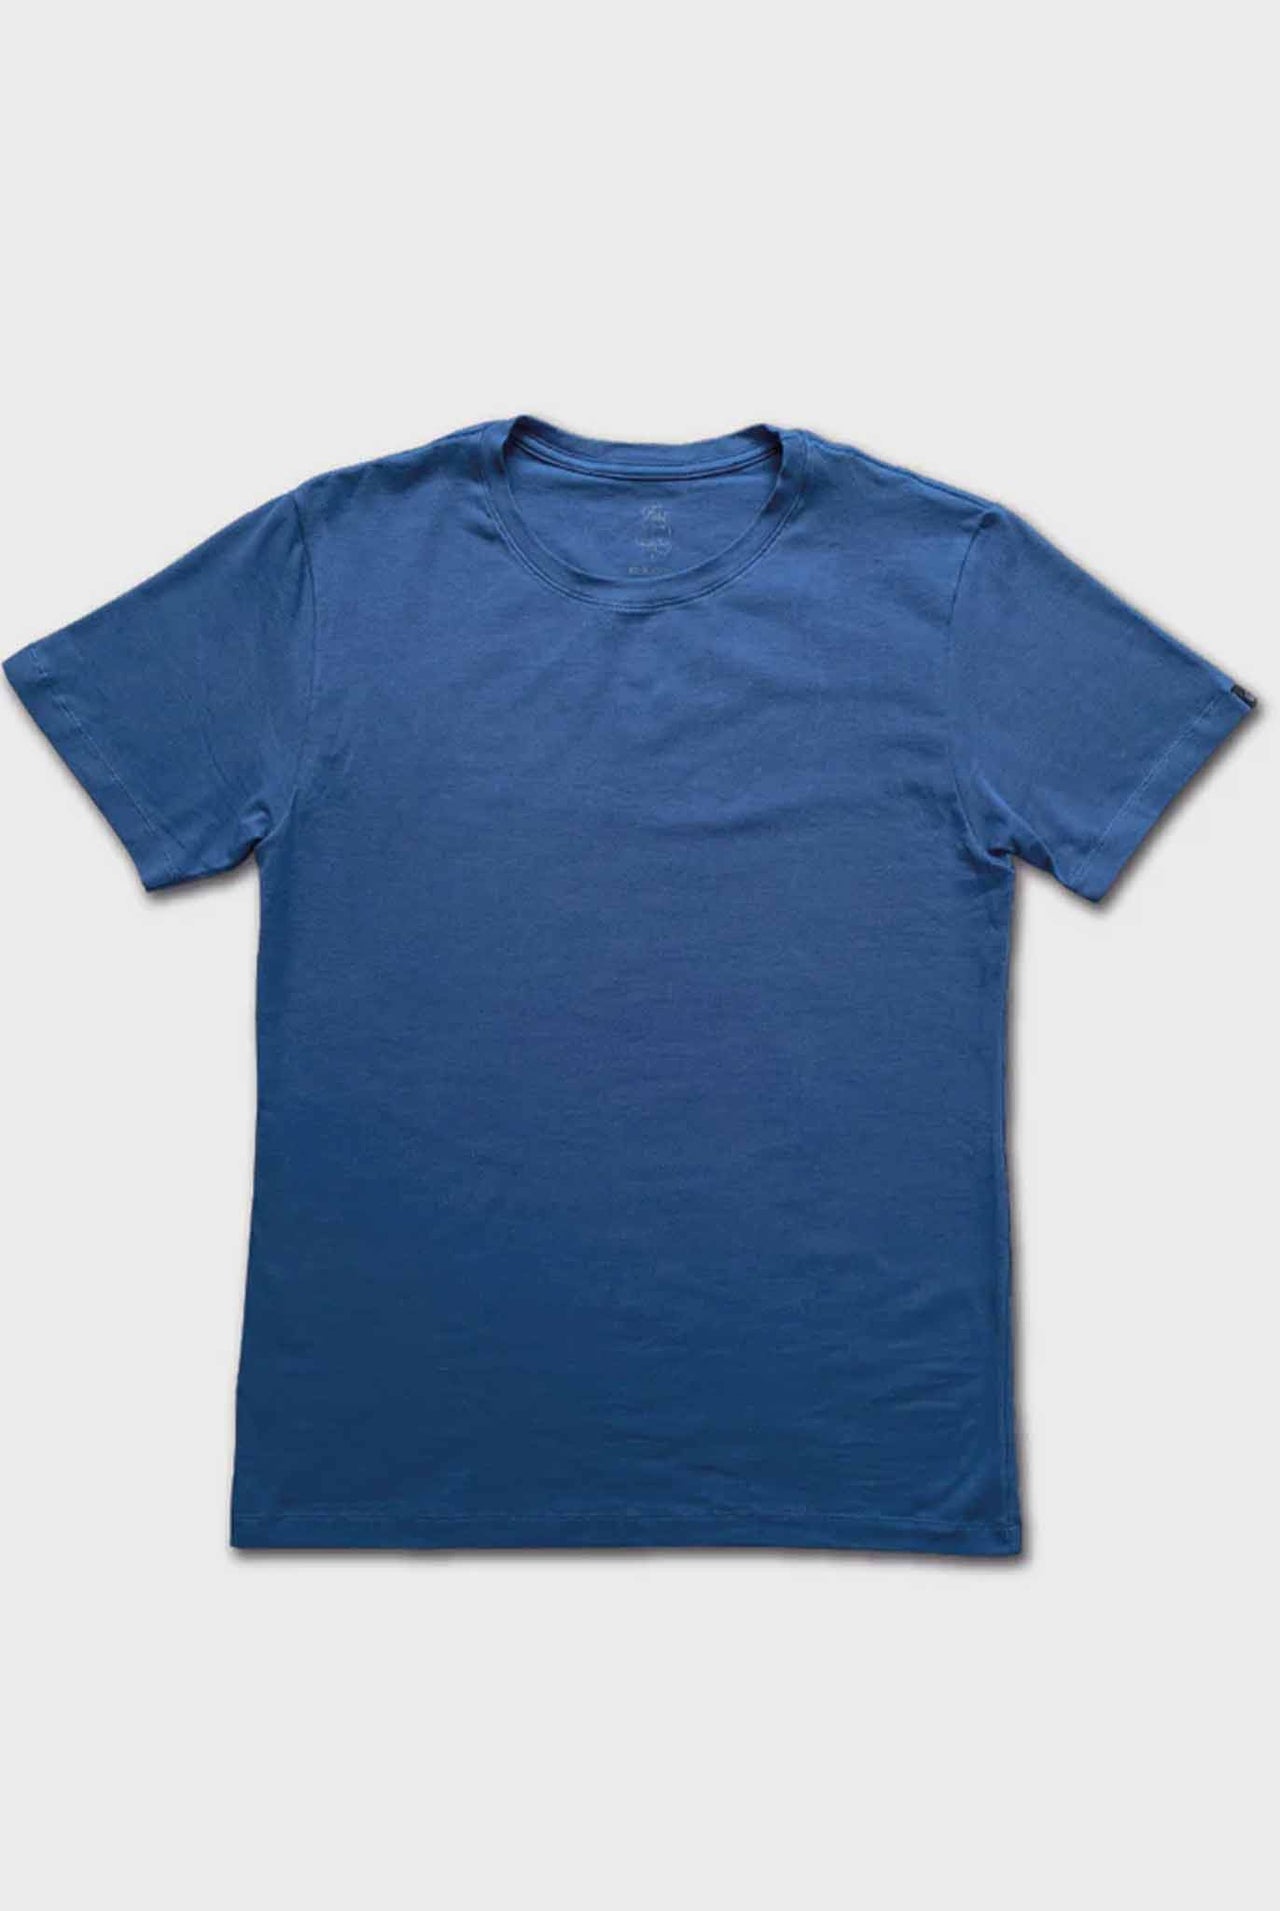 Camiseta Fist Centauro Cold Play Azul